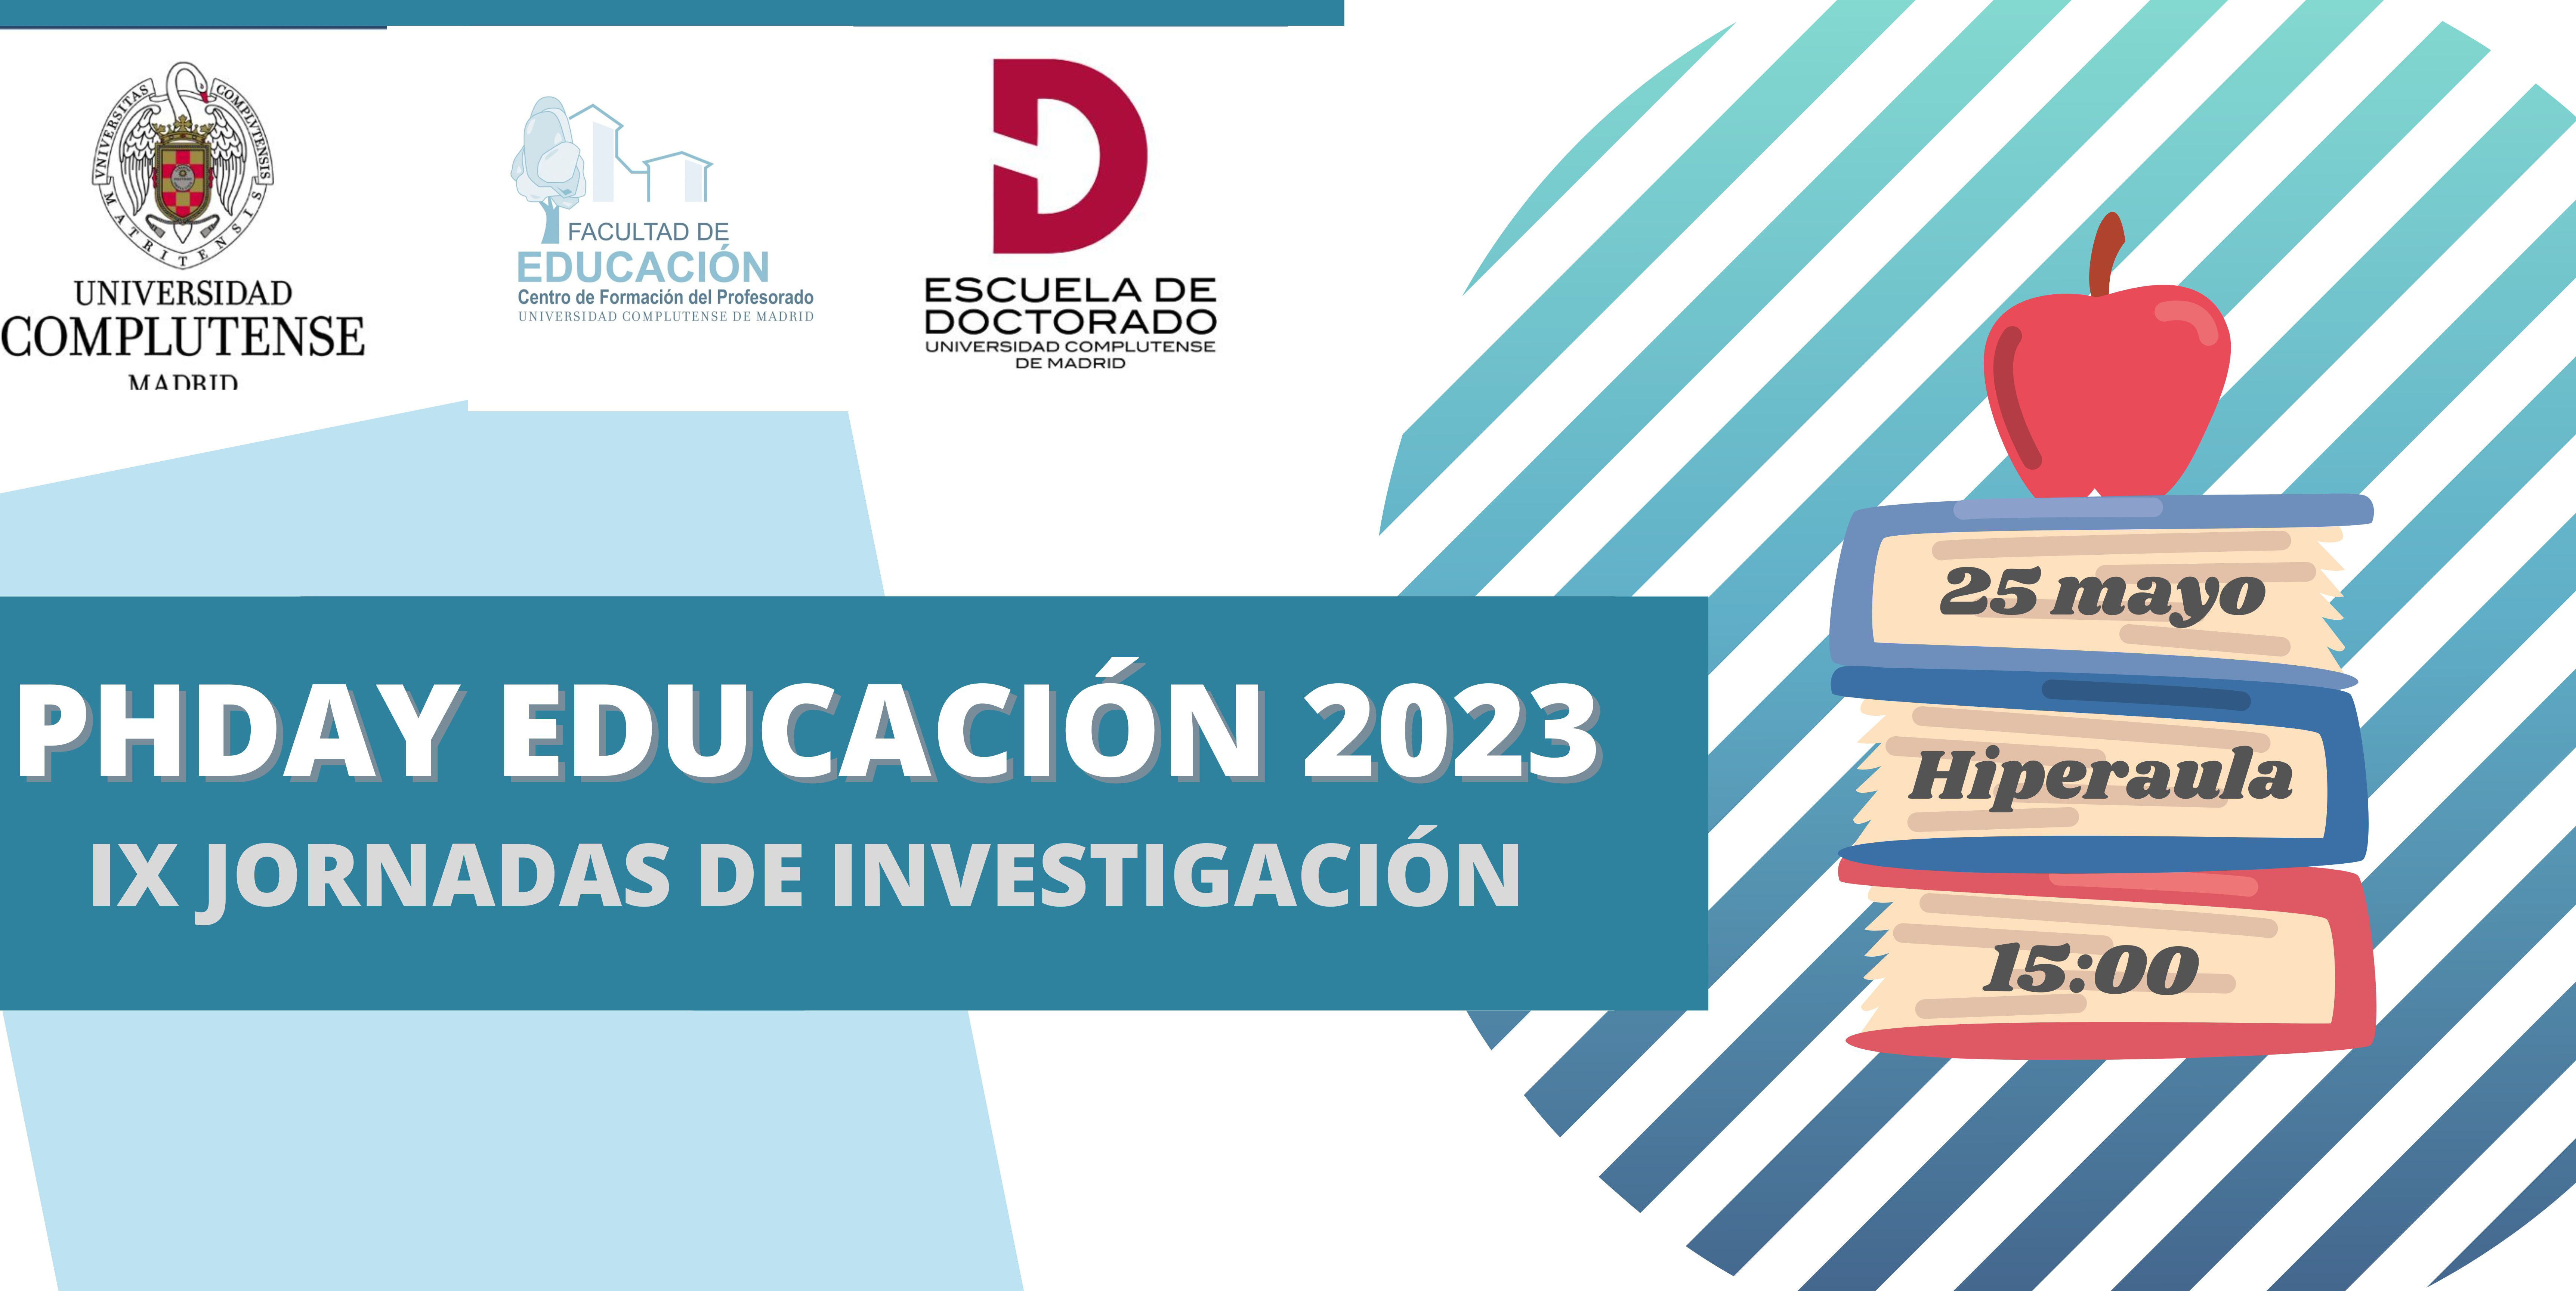 PhDay Educación 2023: IX Jornadas de Investigación (Fotografías)